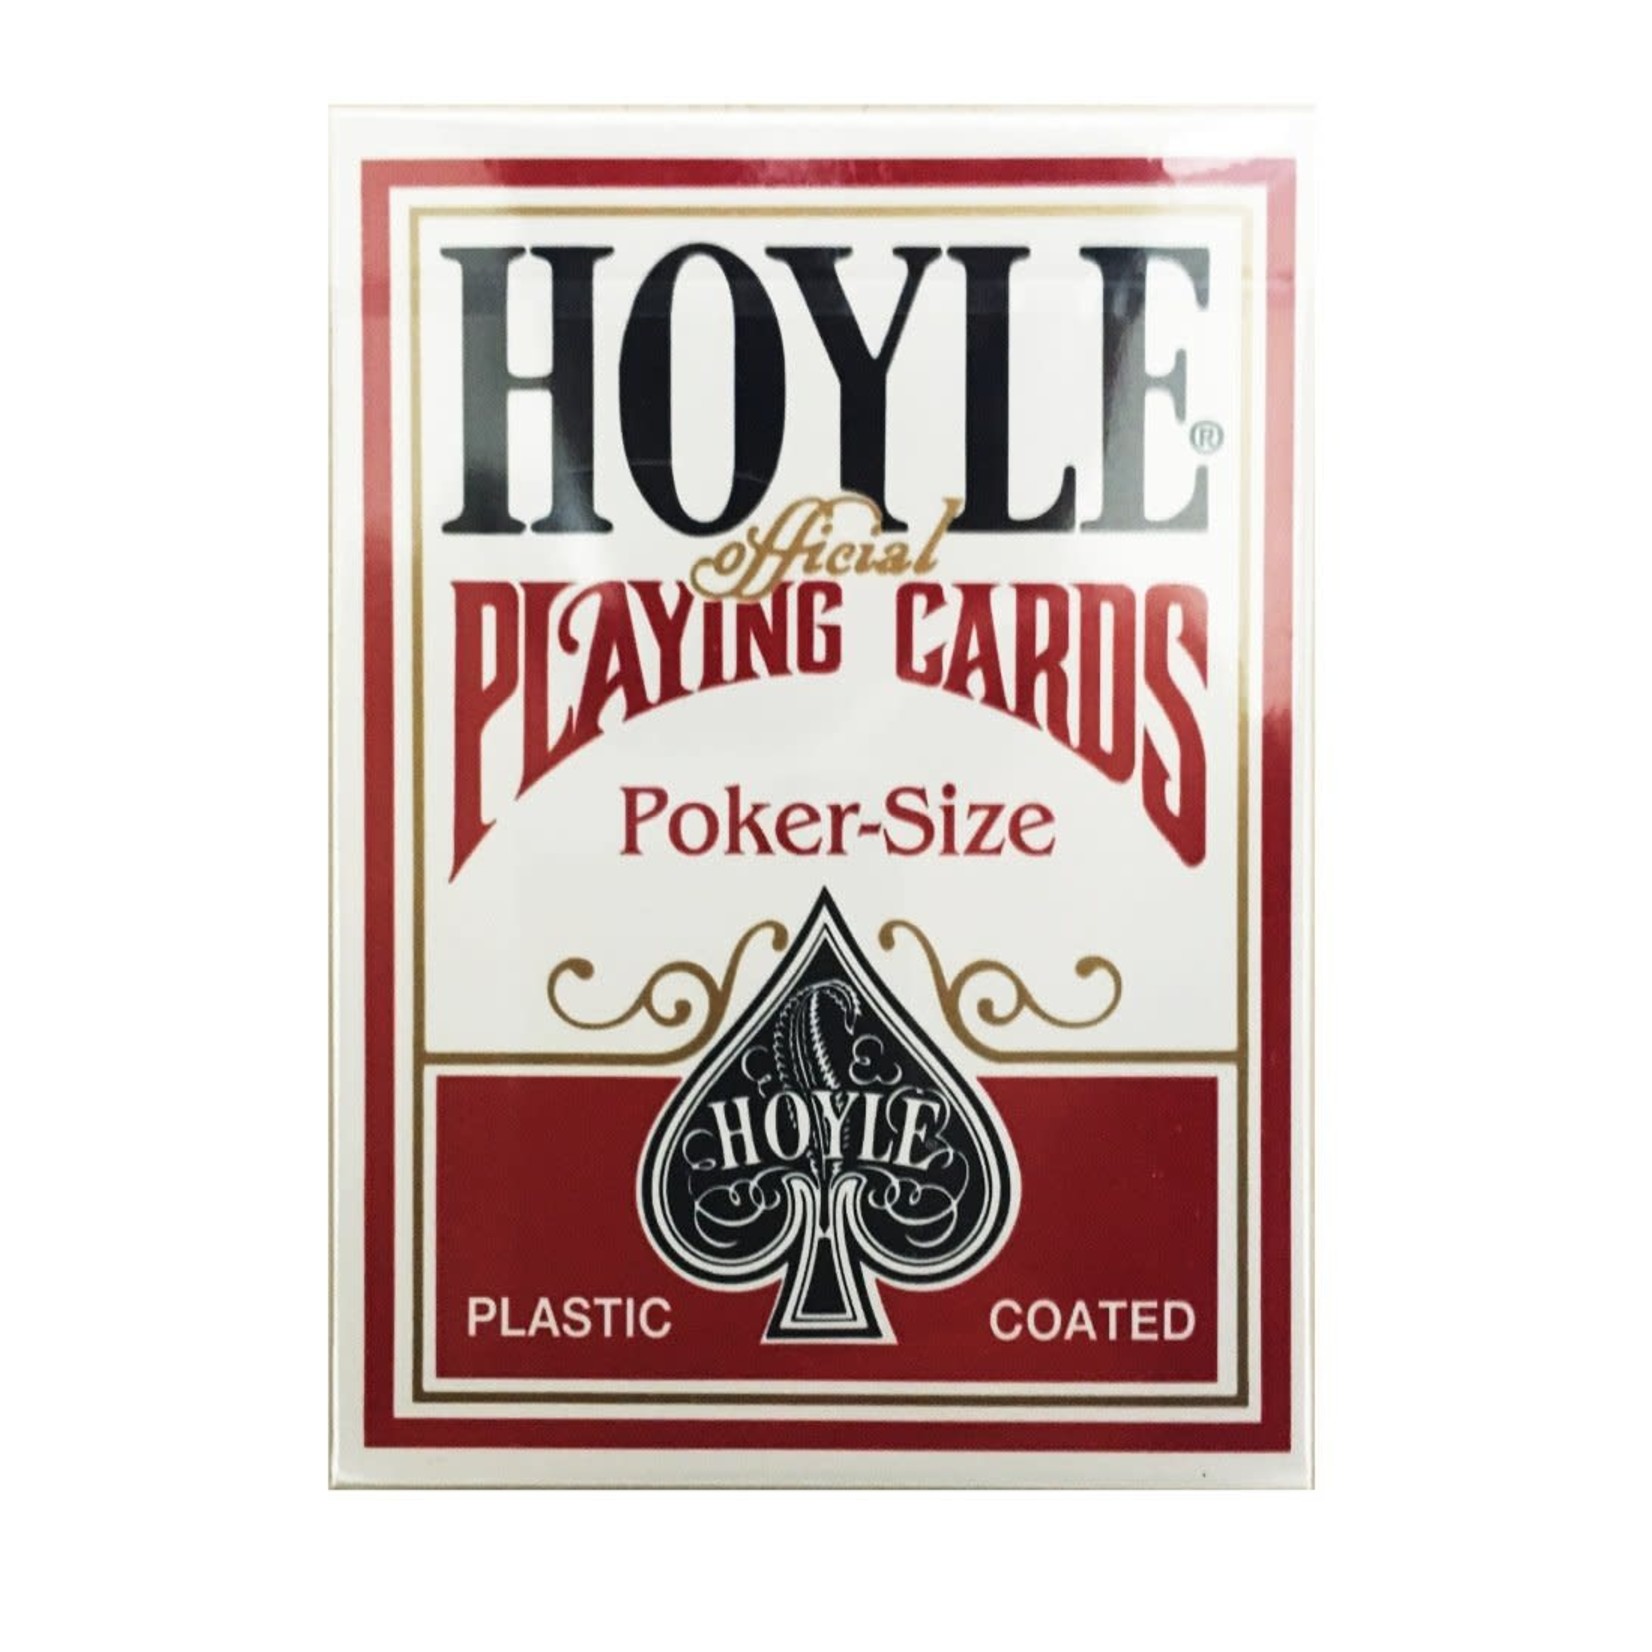 The United States Playing Card Company Hoyle Poker